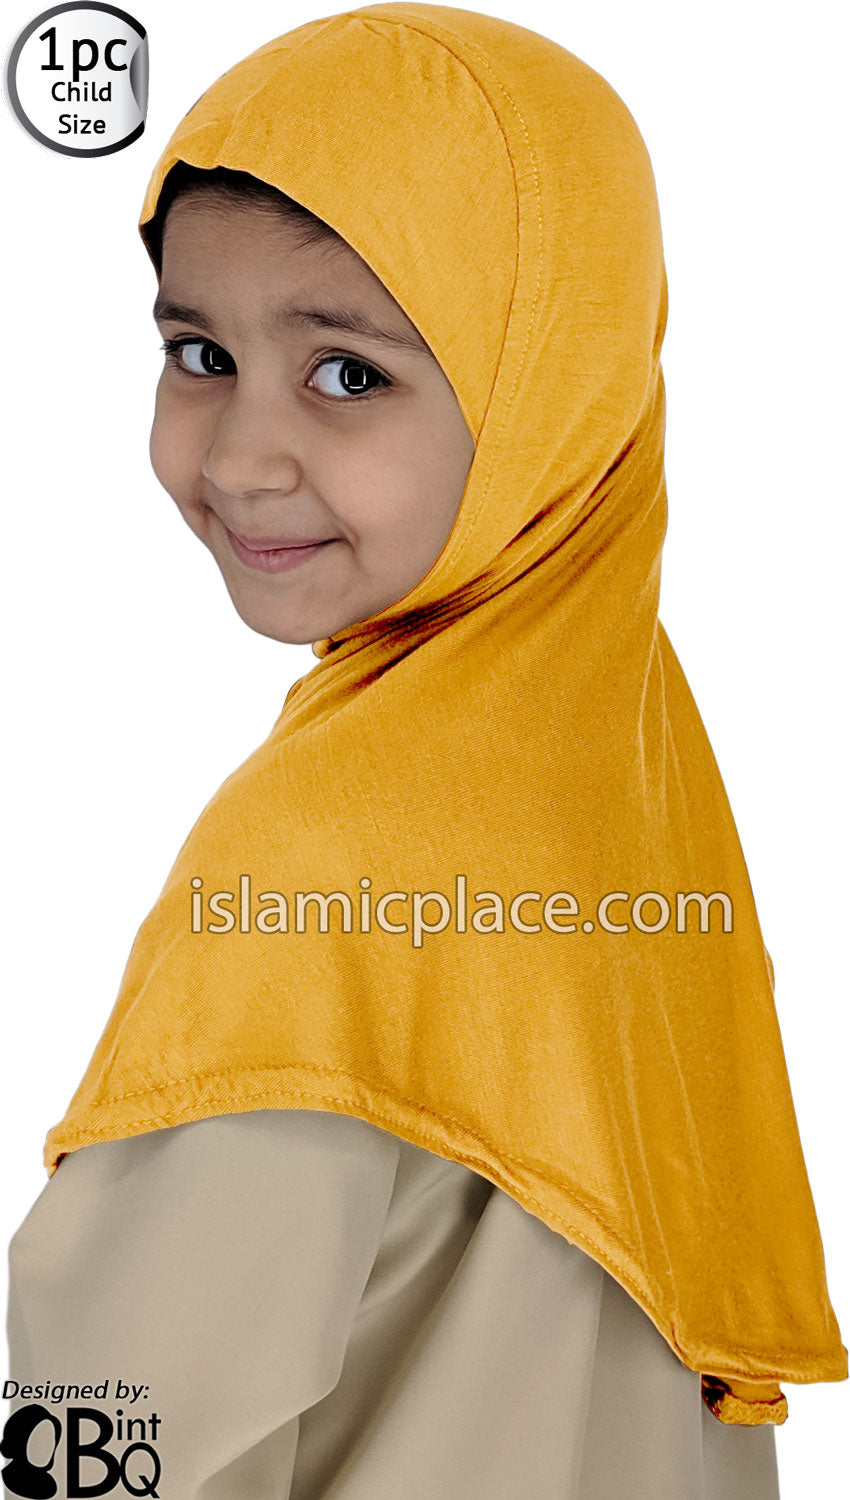 Golden Sand - Plain Girl size (1-piece) Hijab Al-Amira